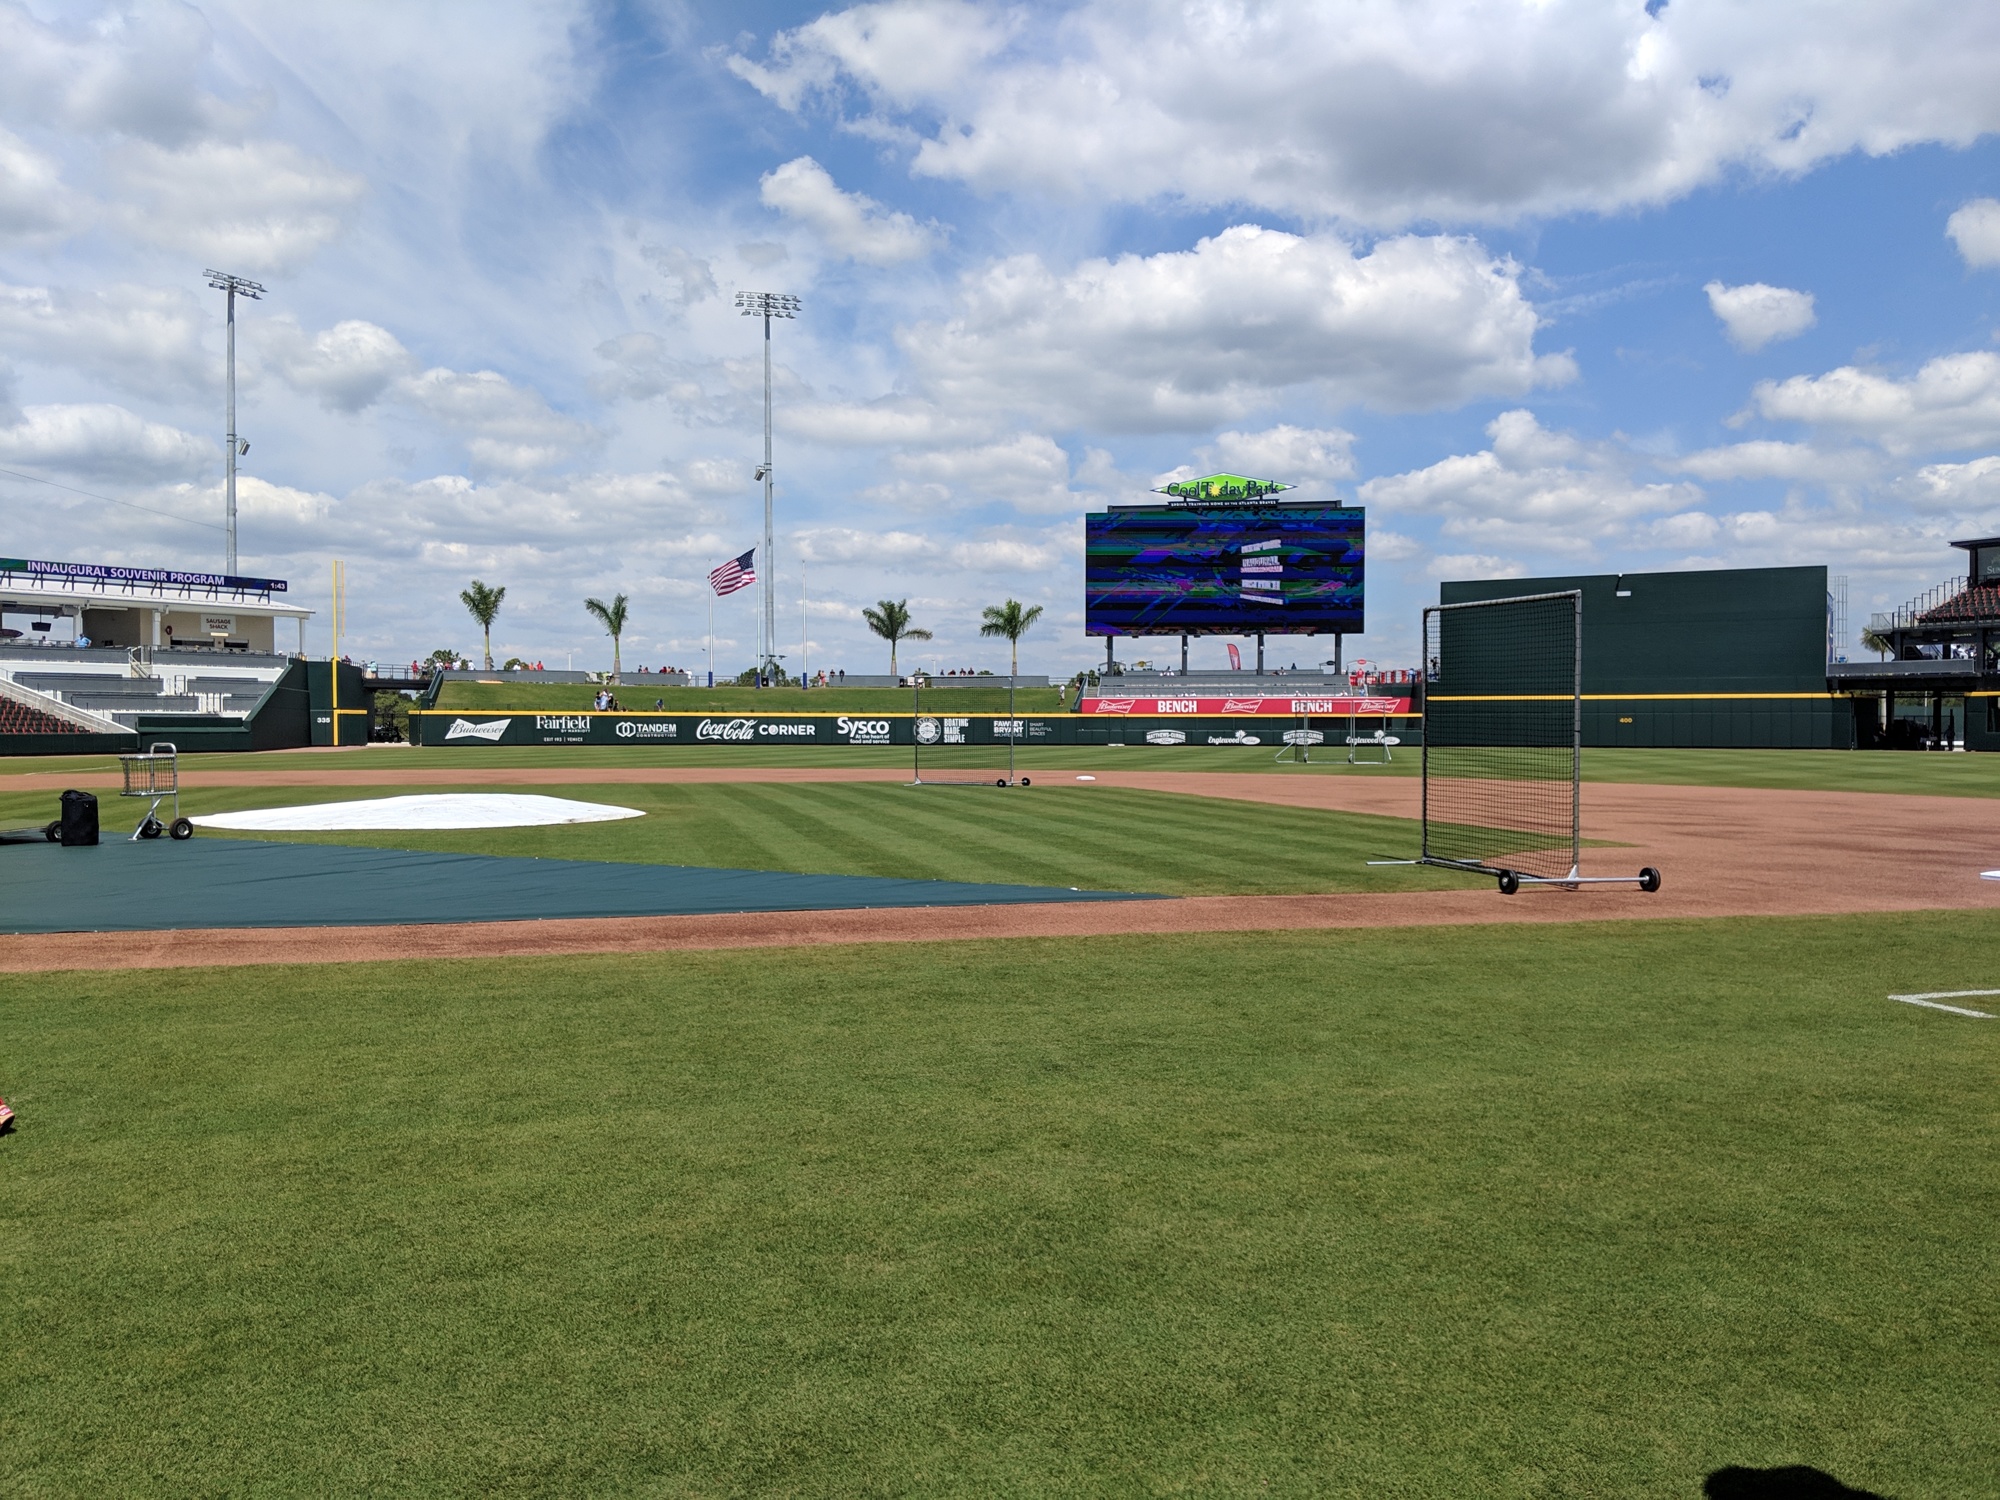 Next spring training will bring options for Sarasota baseball fans